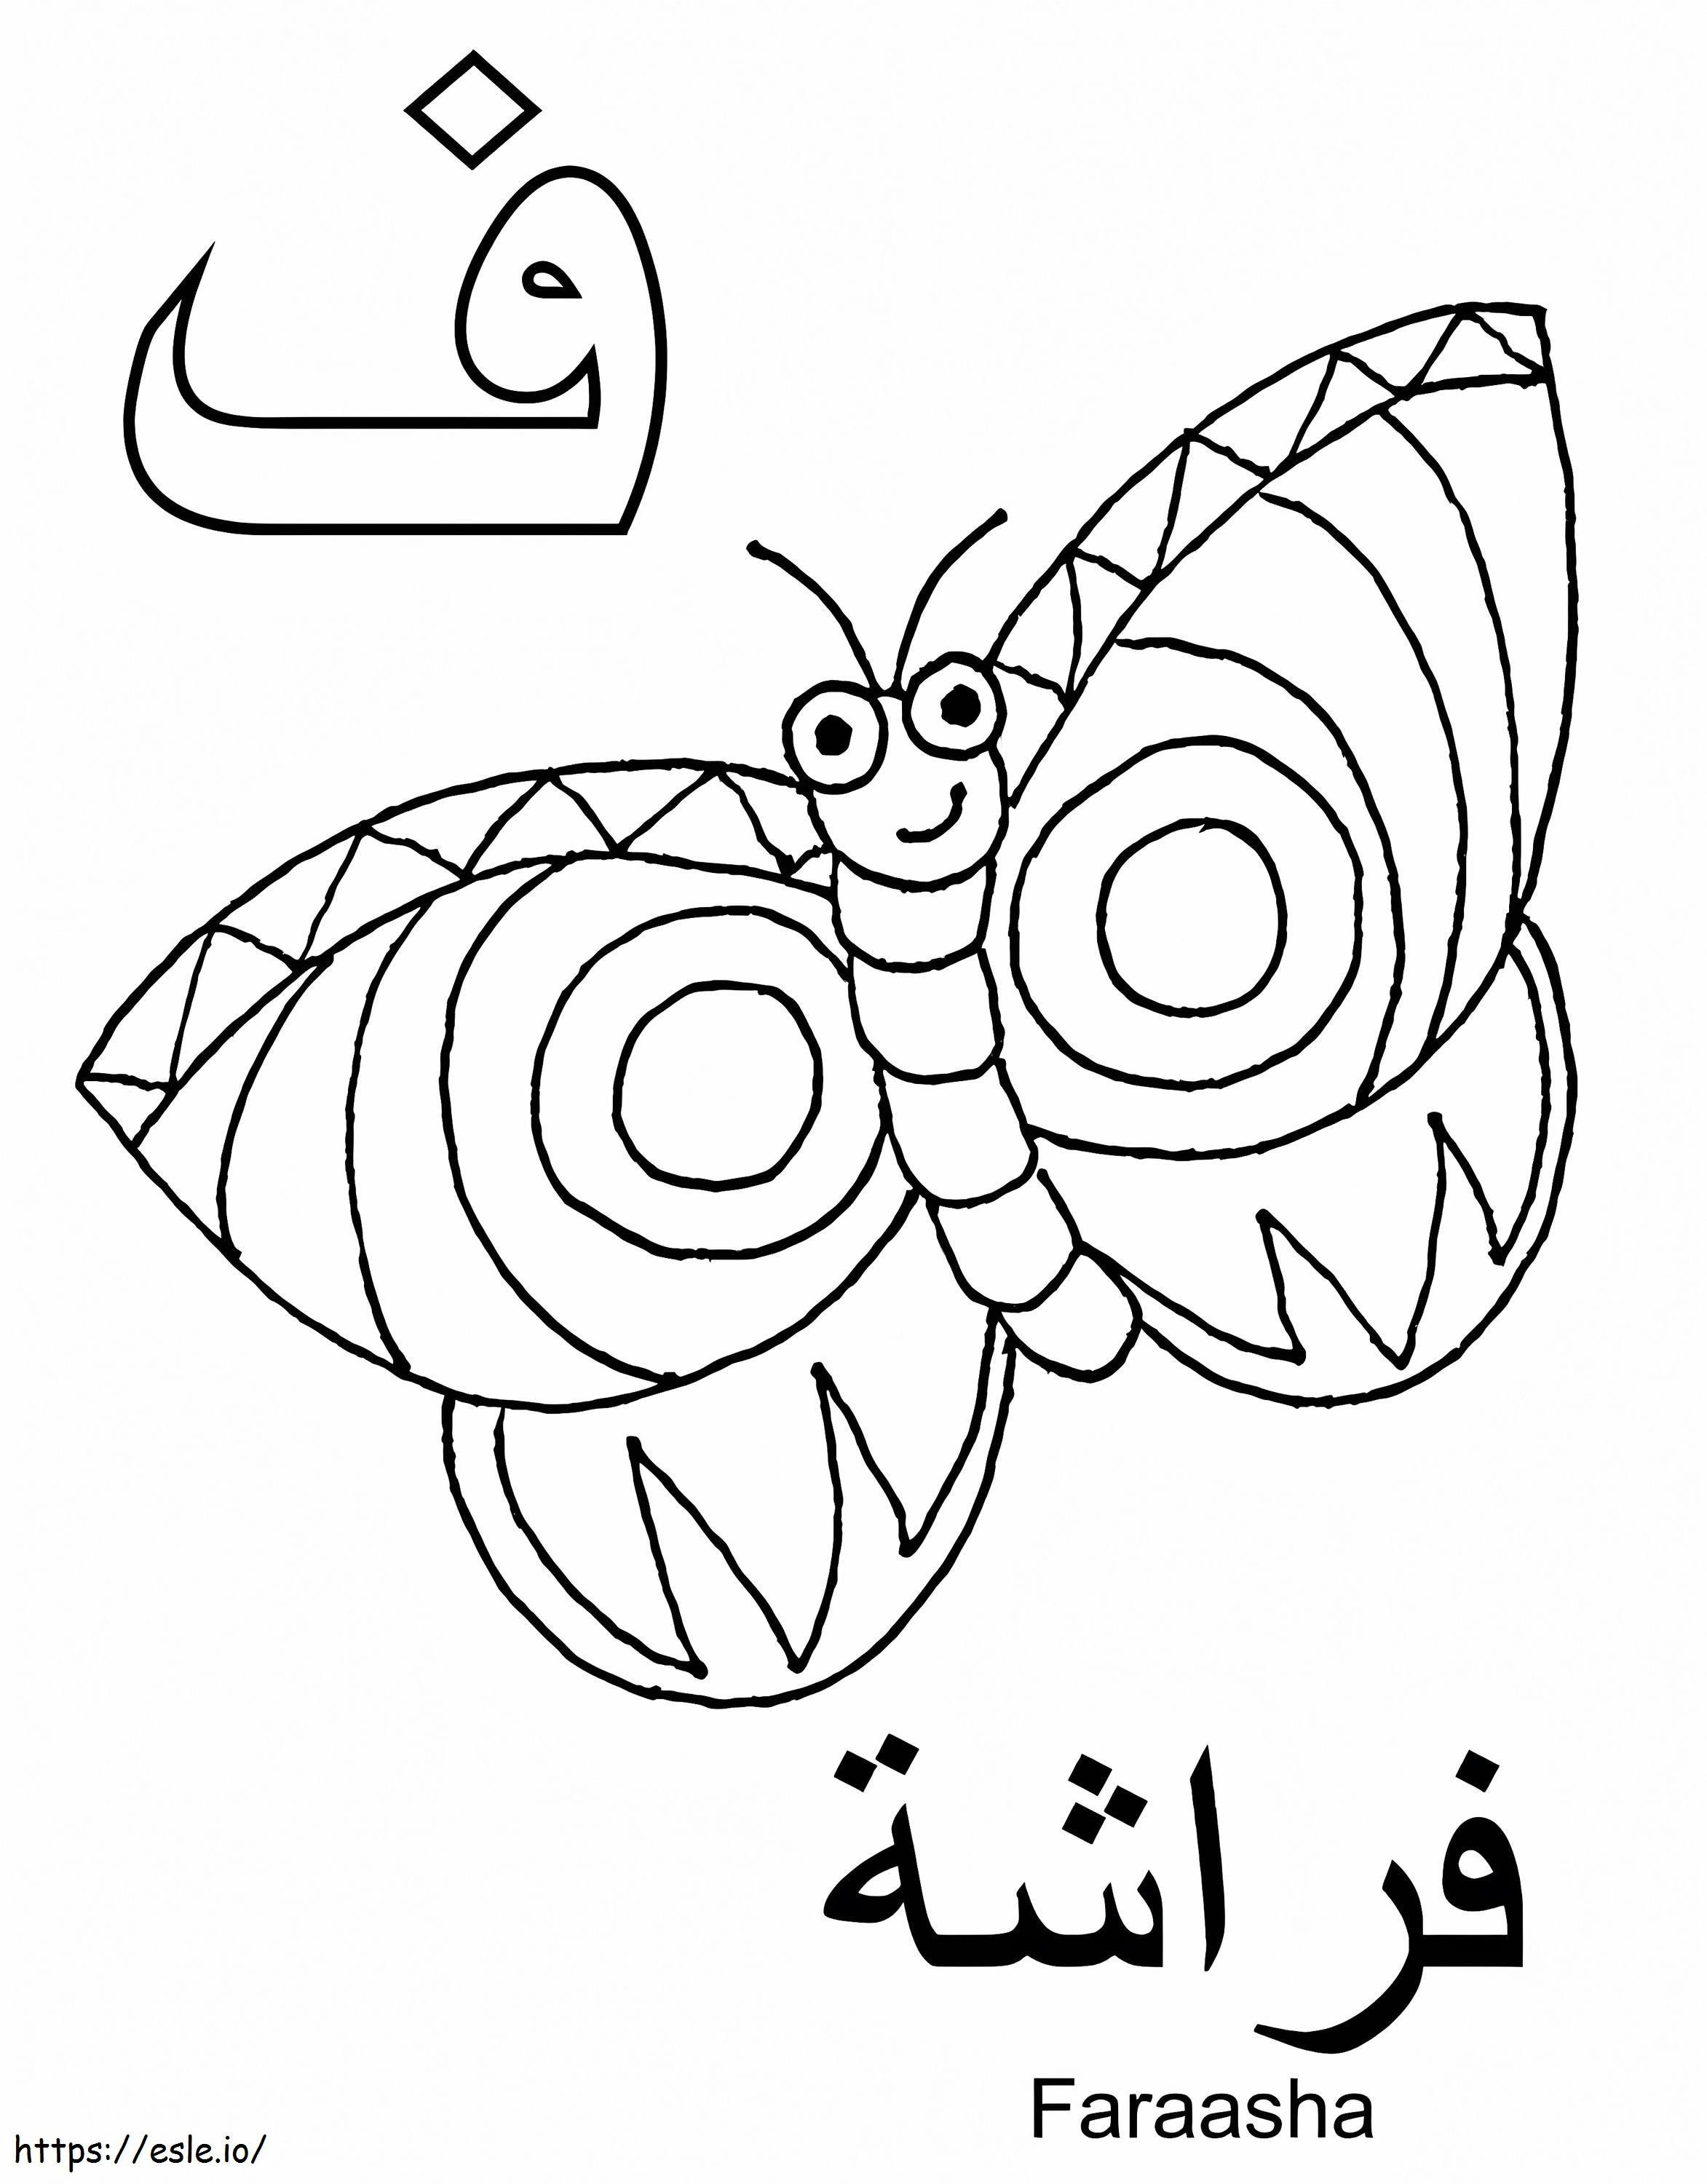 Alfabetul arab Faraasha de colorat